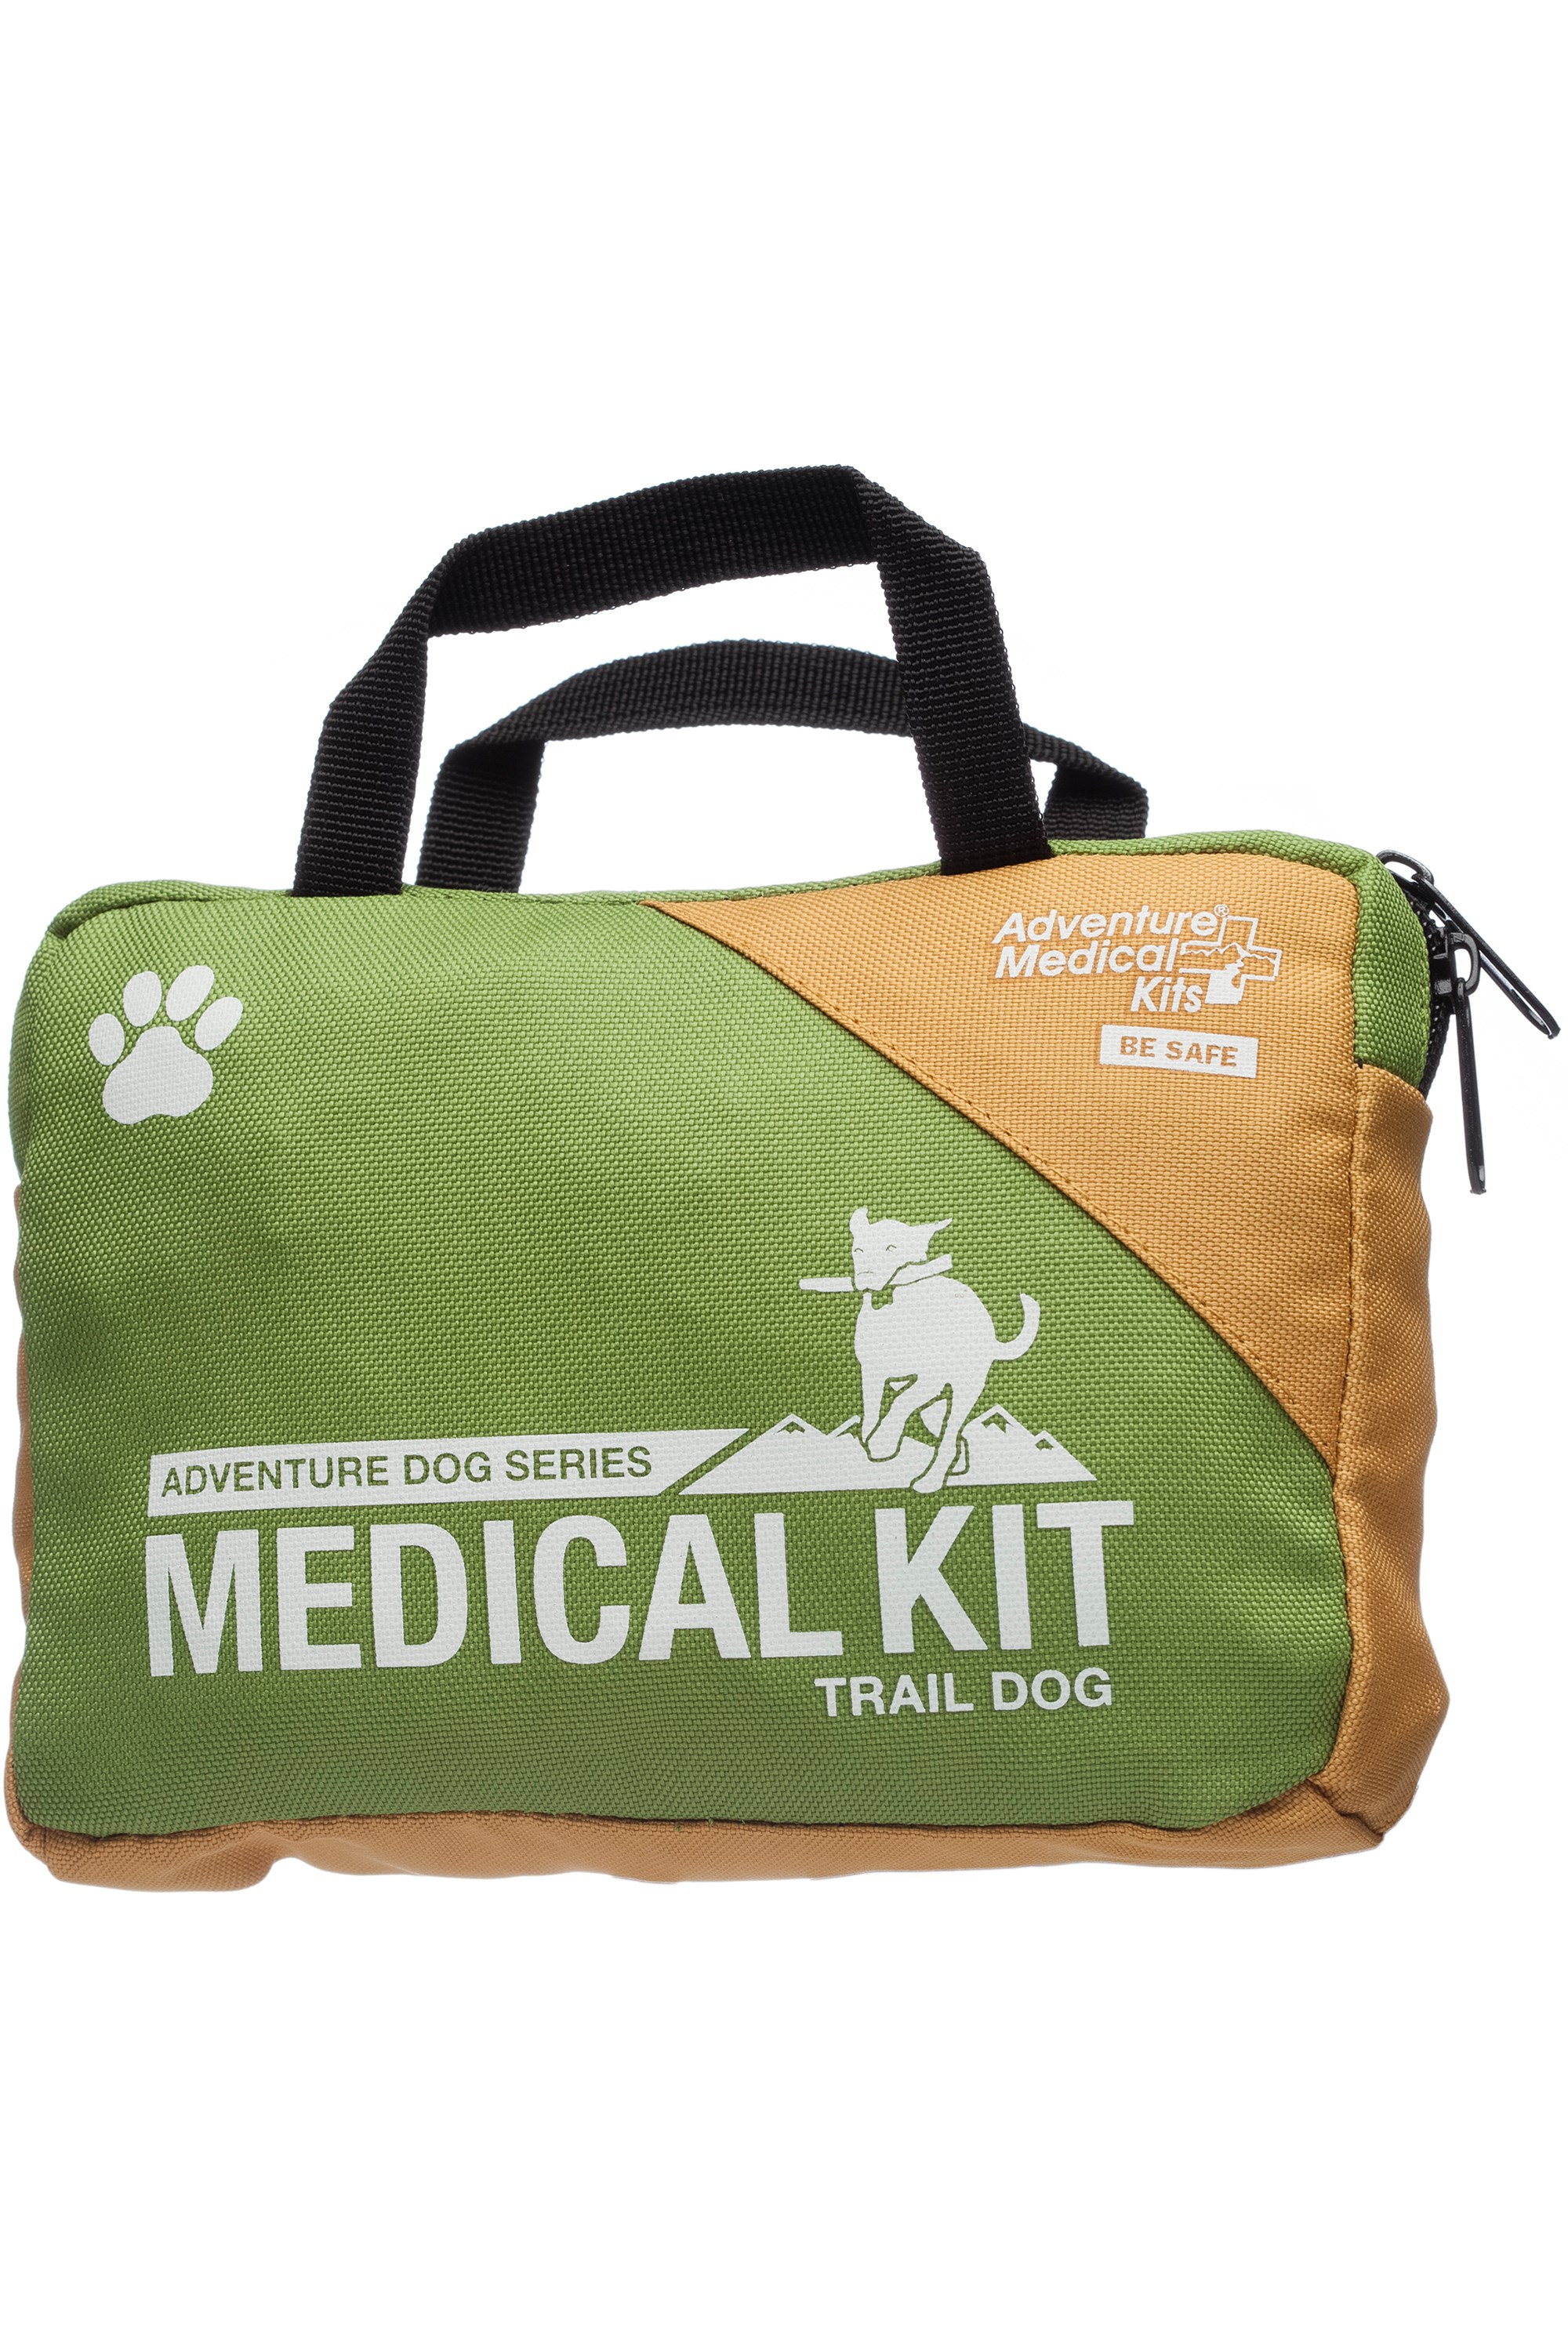 AMK Trail Dog Medical Kit - ONE